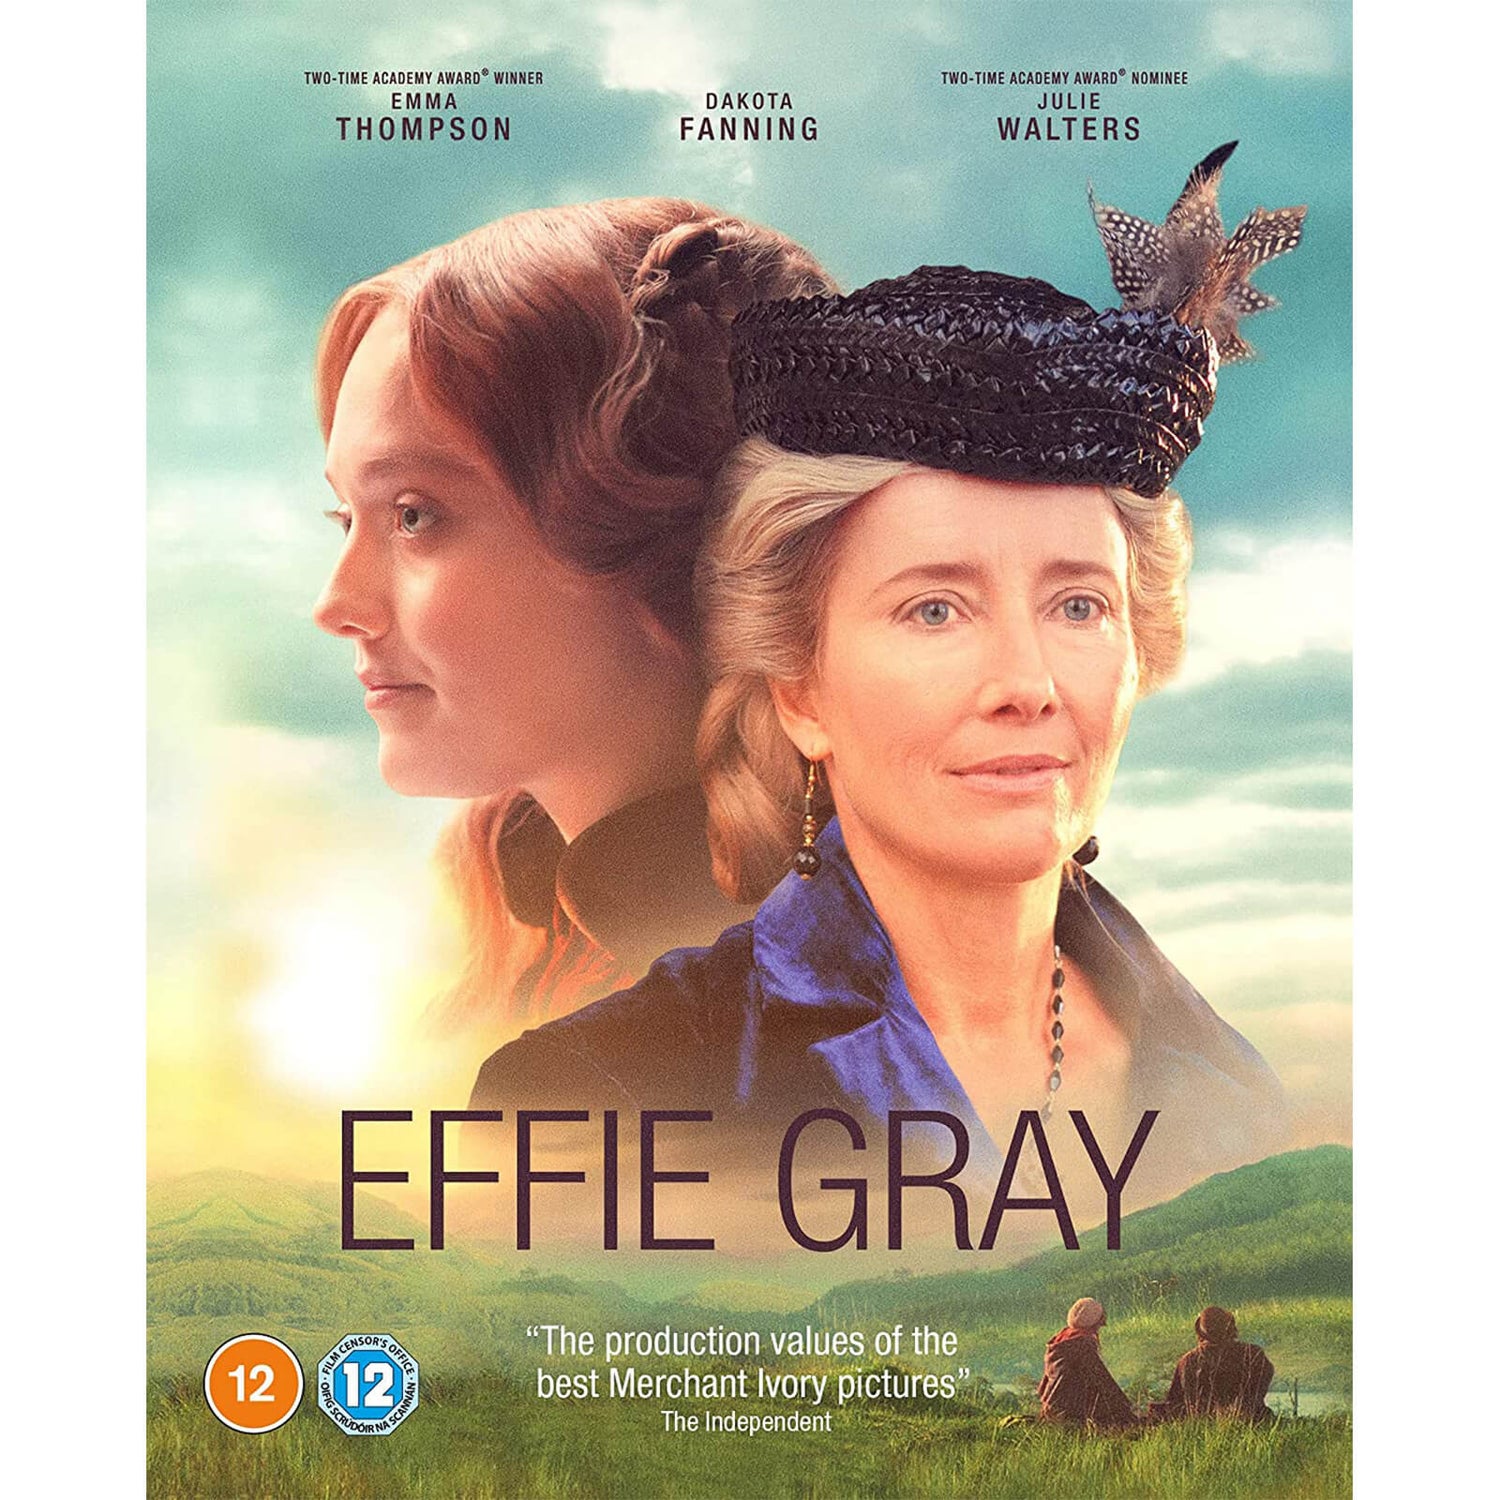 Effie Gray - Special Edition Dual Format